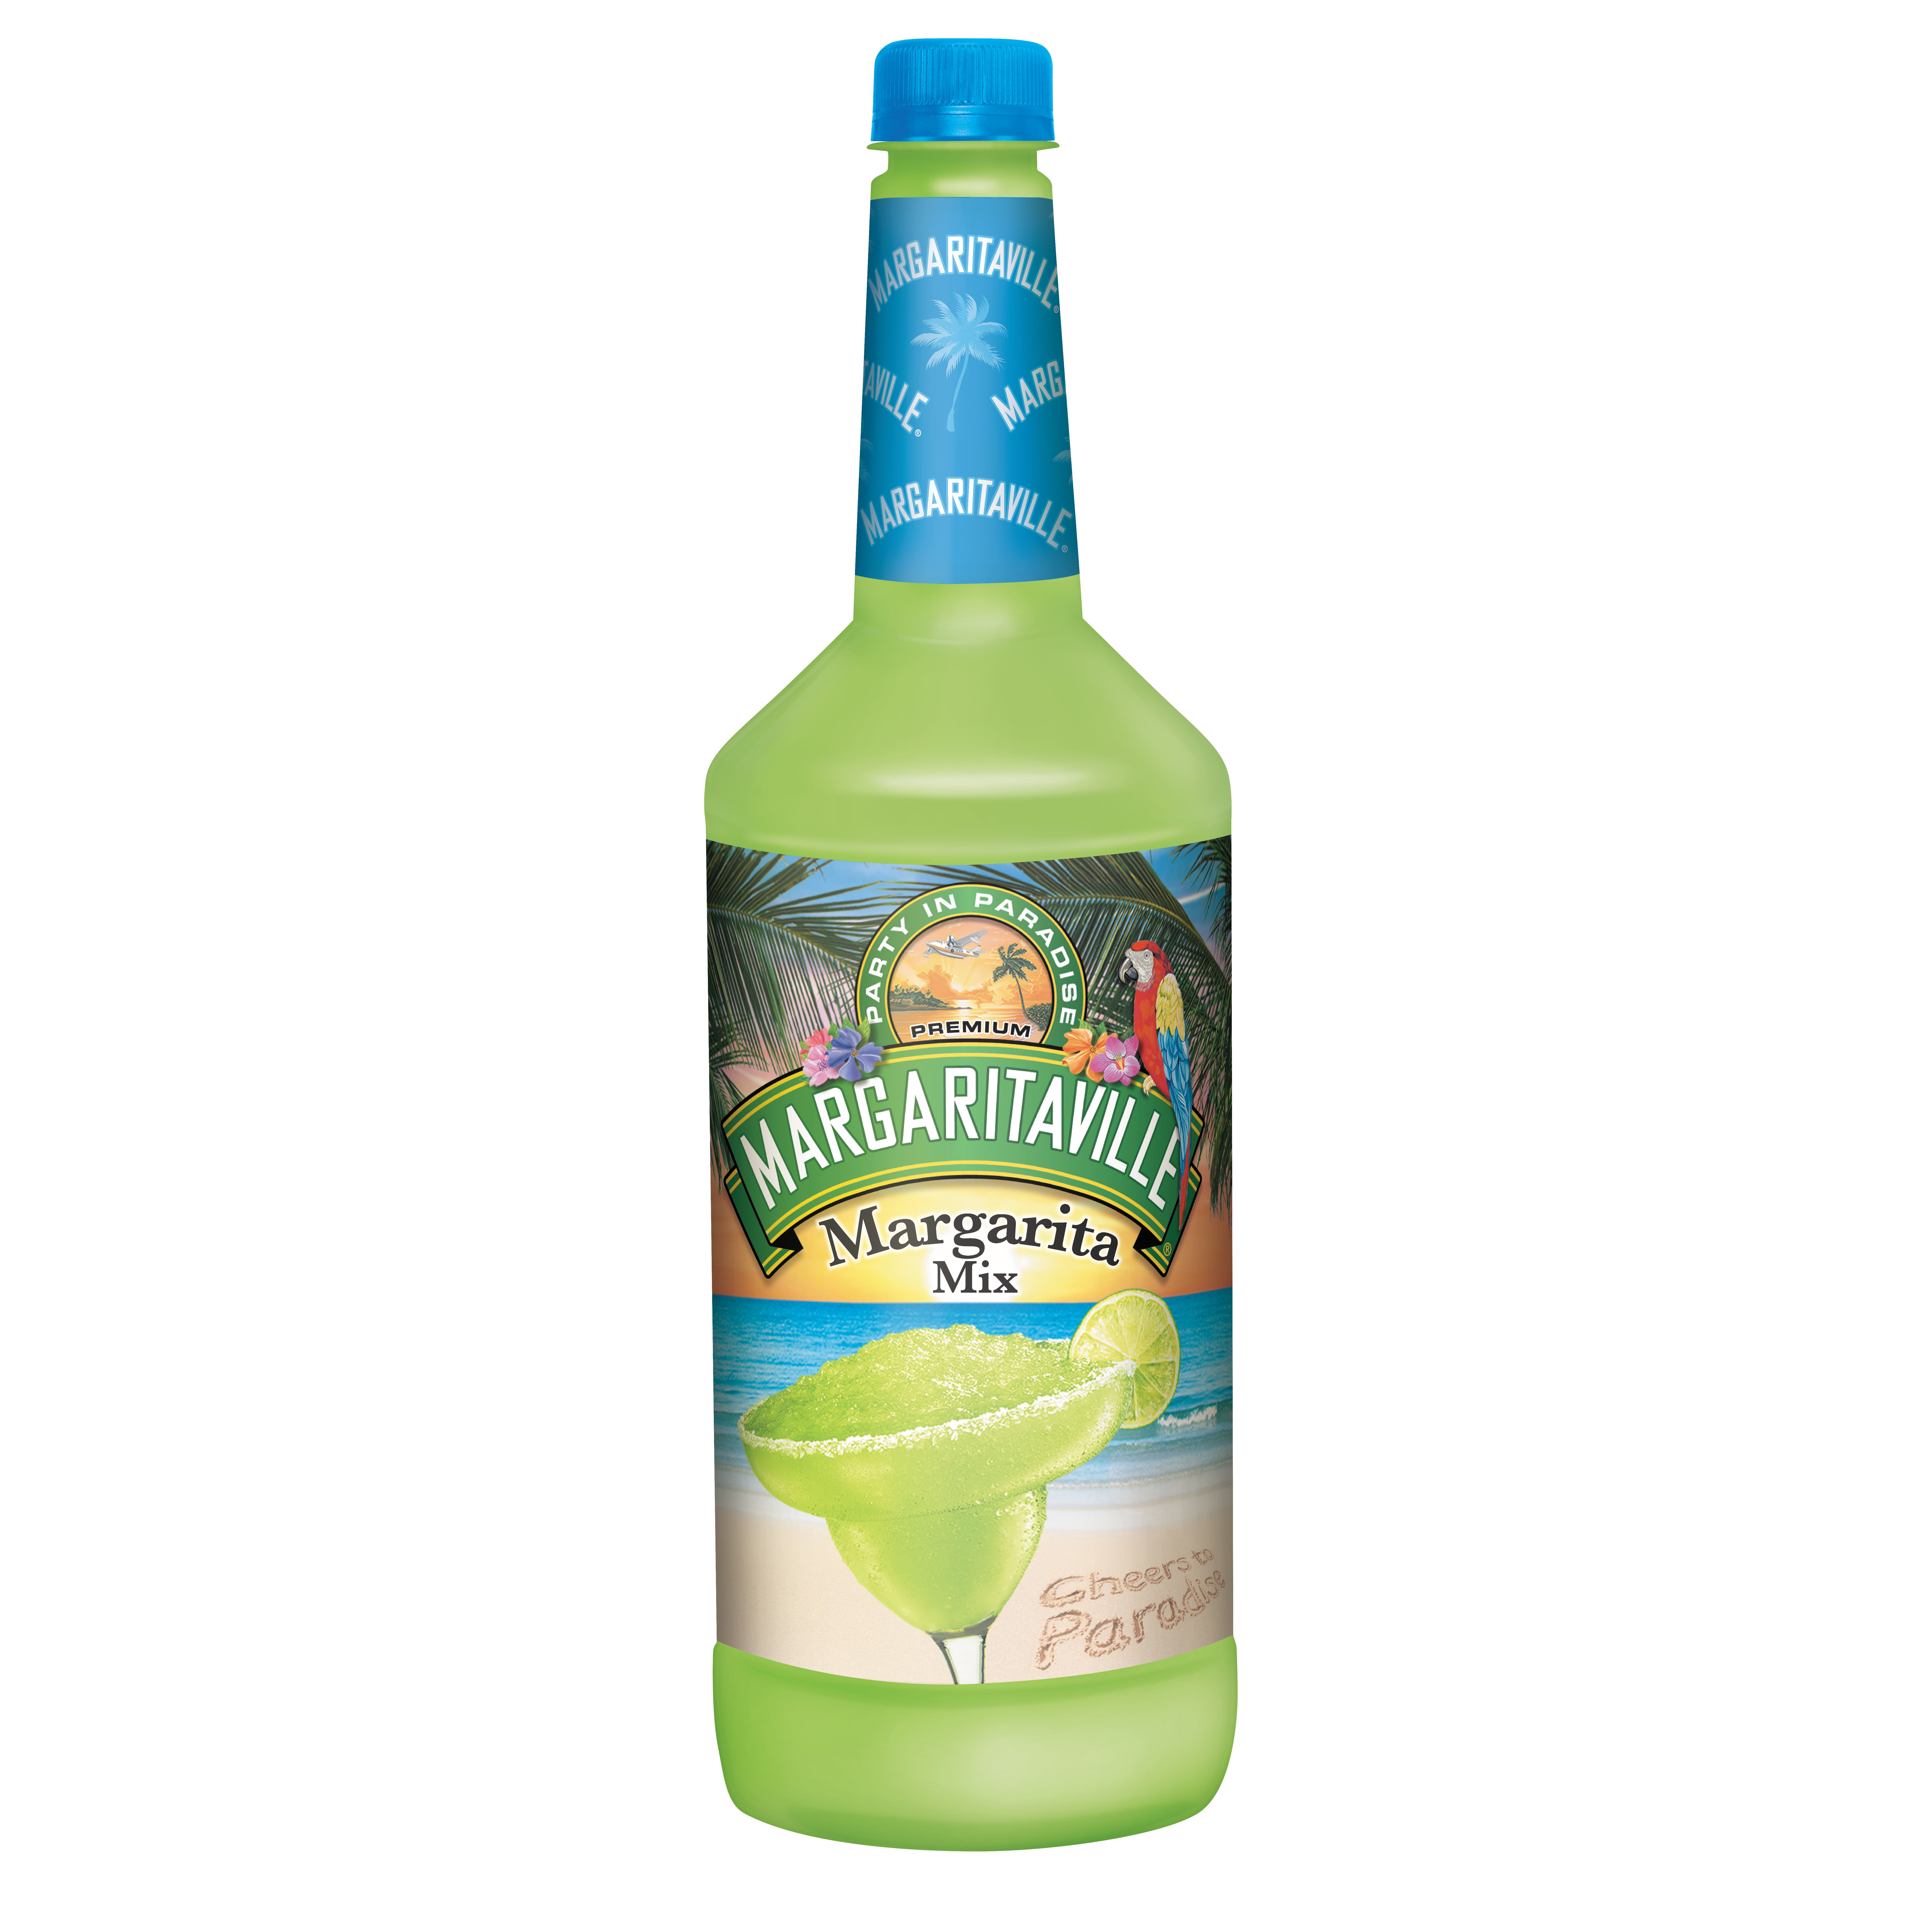 Margaritaville Margarita Mix, 1 L Bottle, 6 Count - Walmart.com.